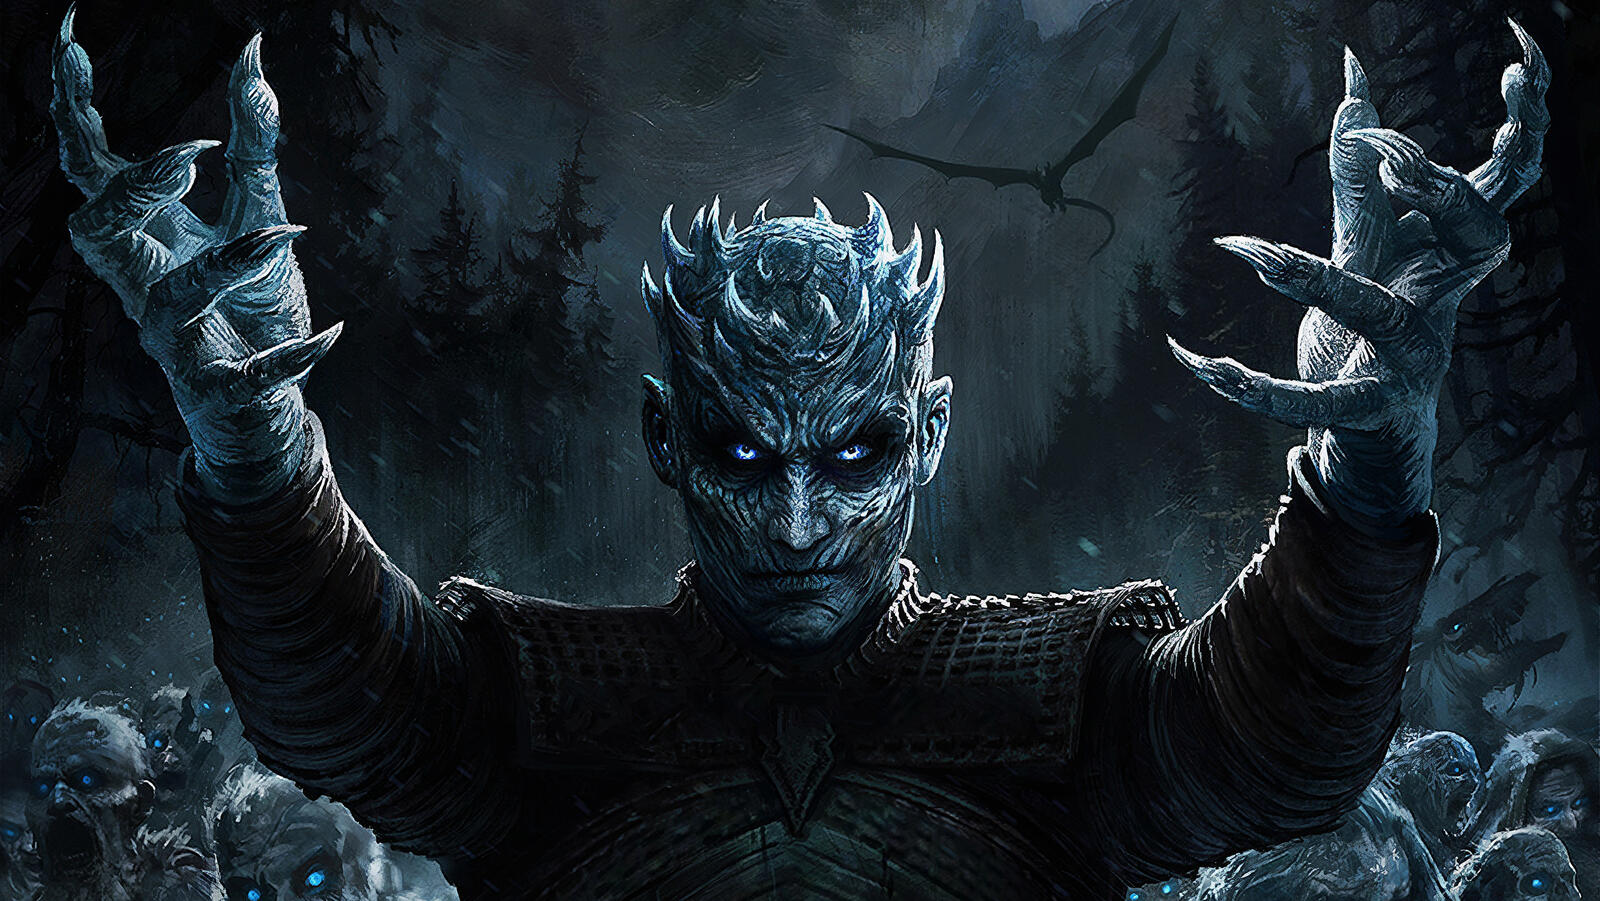 Wallpapers Night King White Walkers Game of Thrones season 8 on the desktop